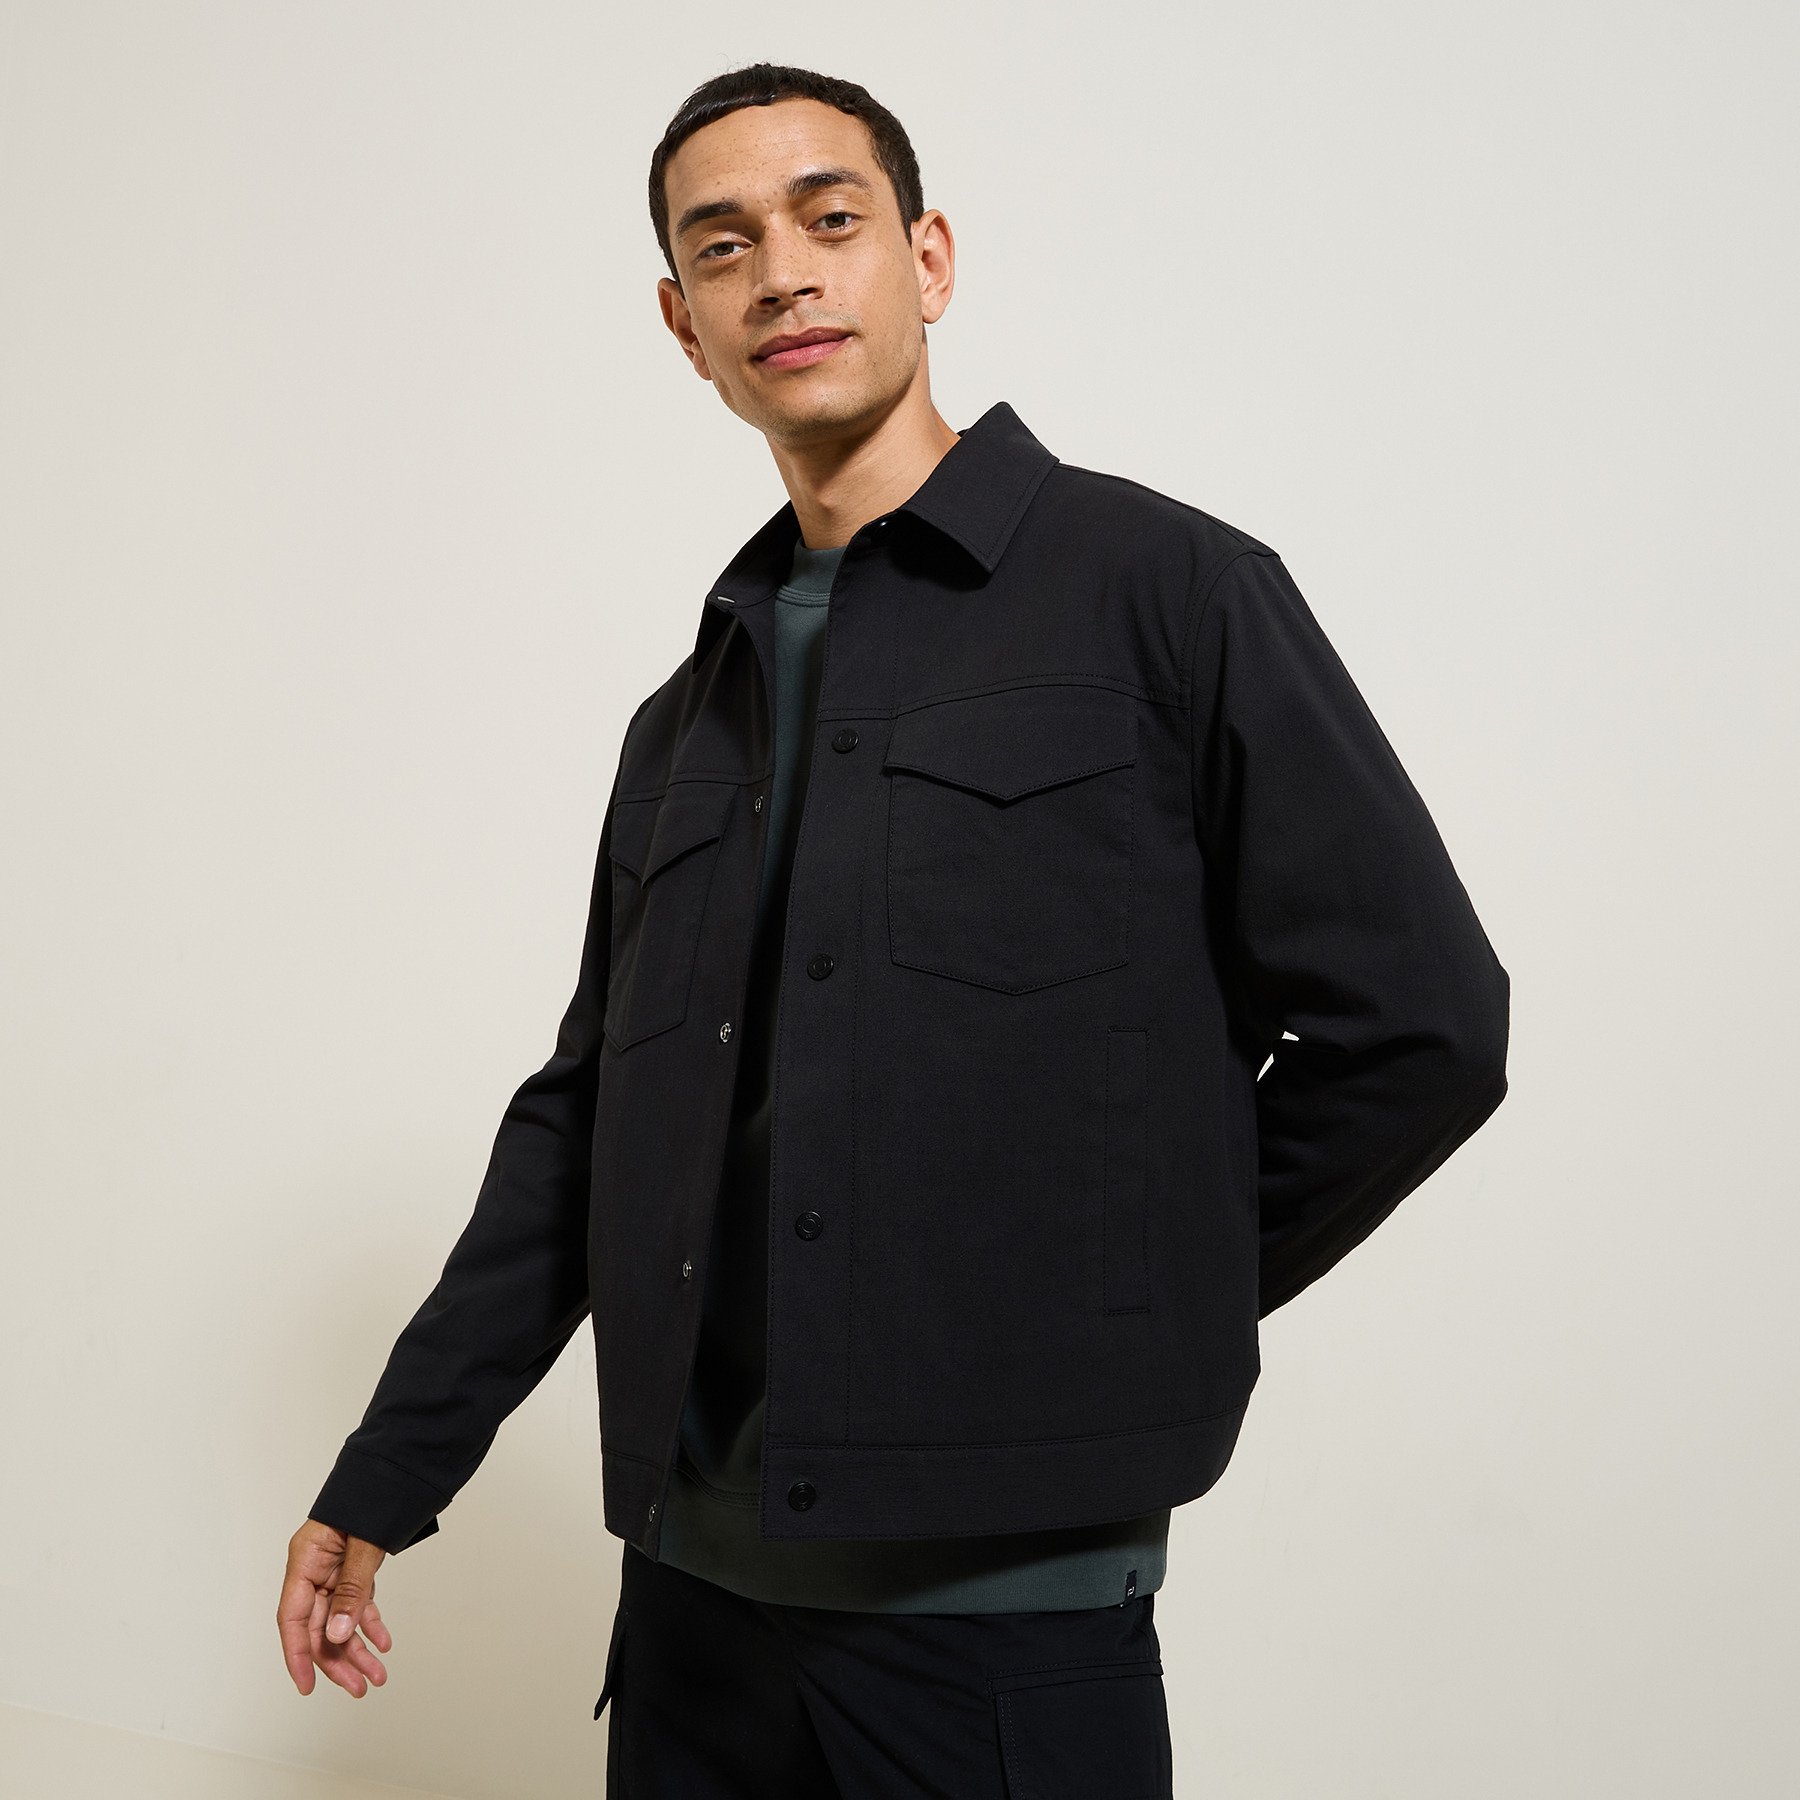 Blouson court col chemise Noir S 100% Polyester, 98% Coton, 2% Elasthanne Homme